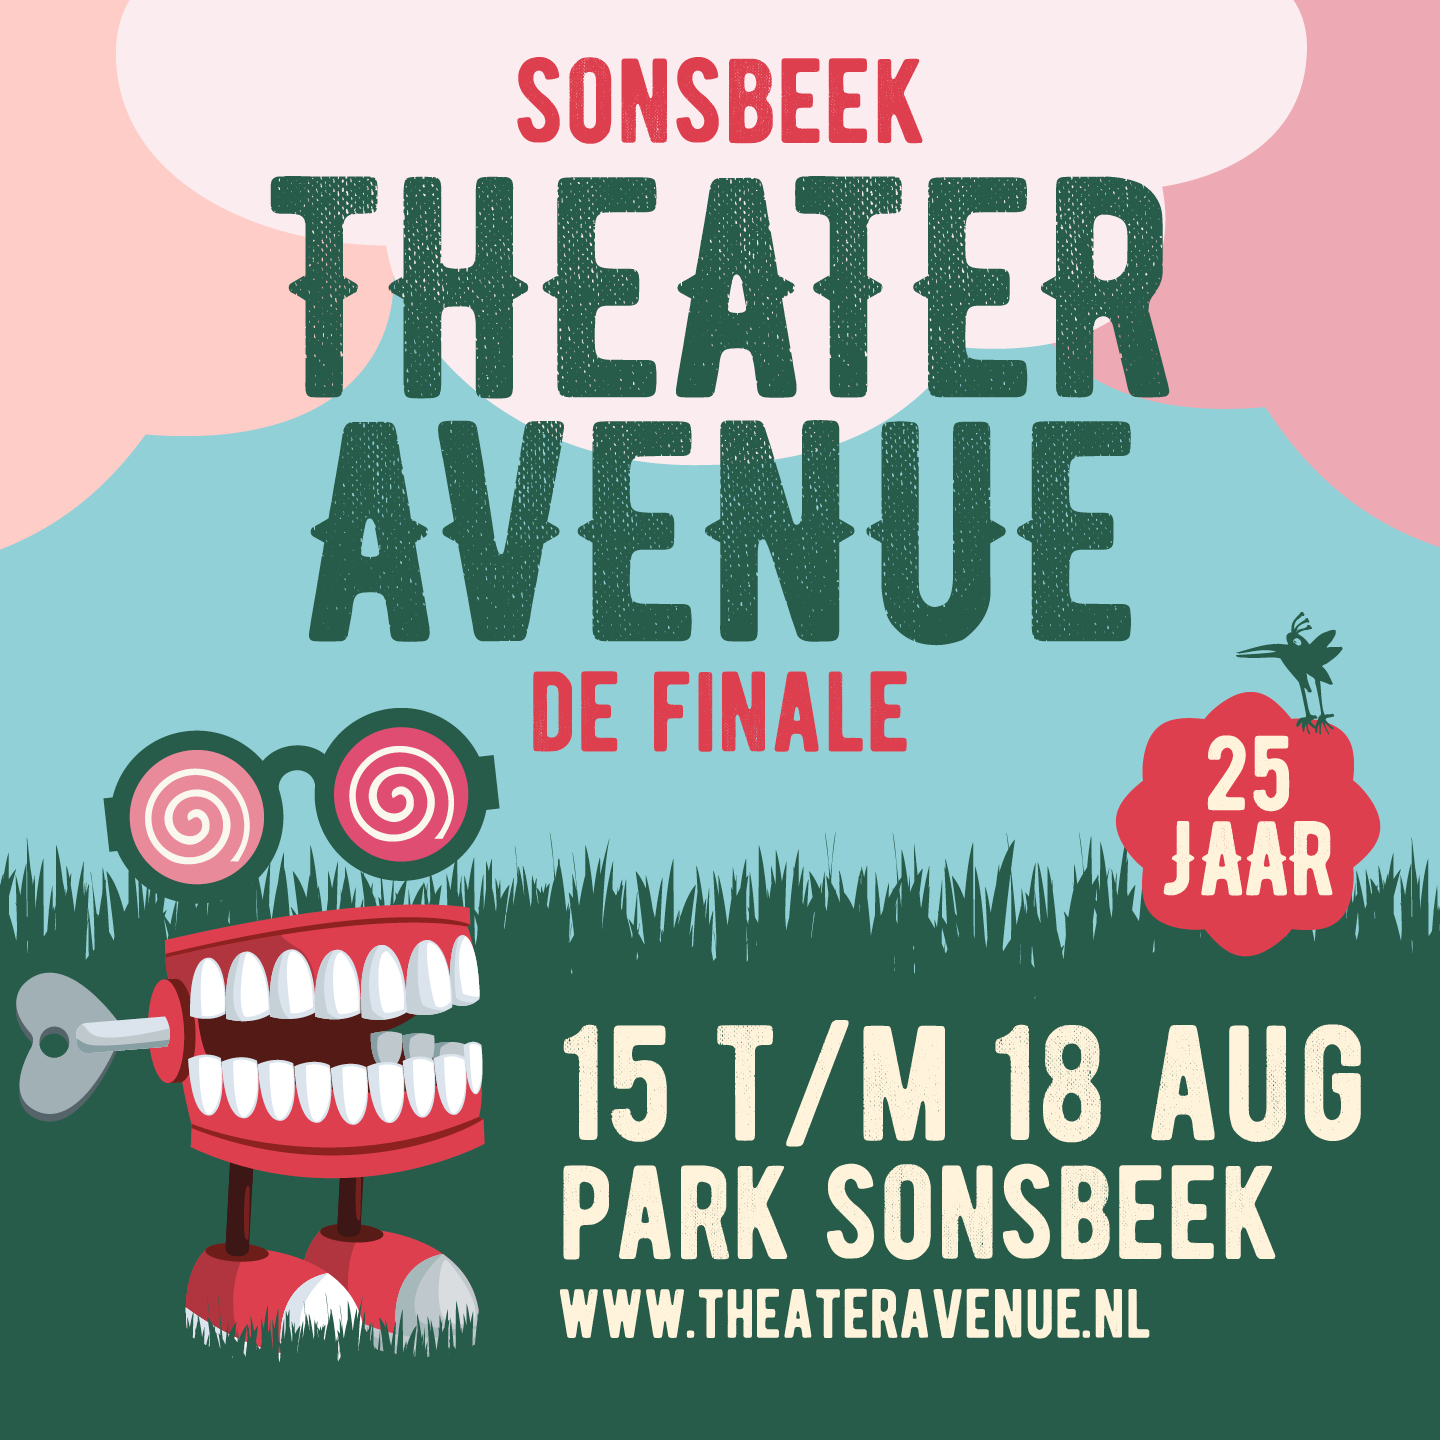 Sonsbeek Theater Avenue